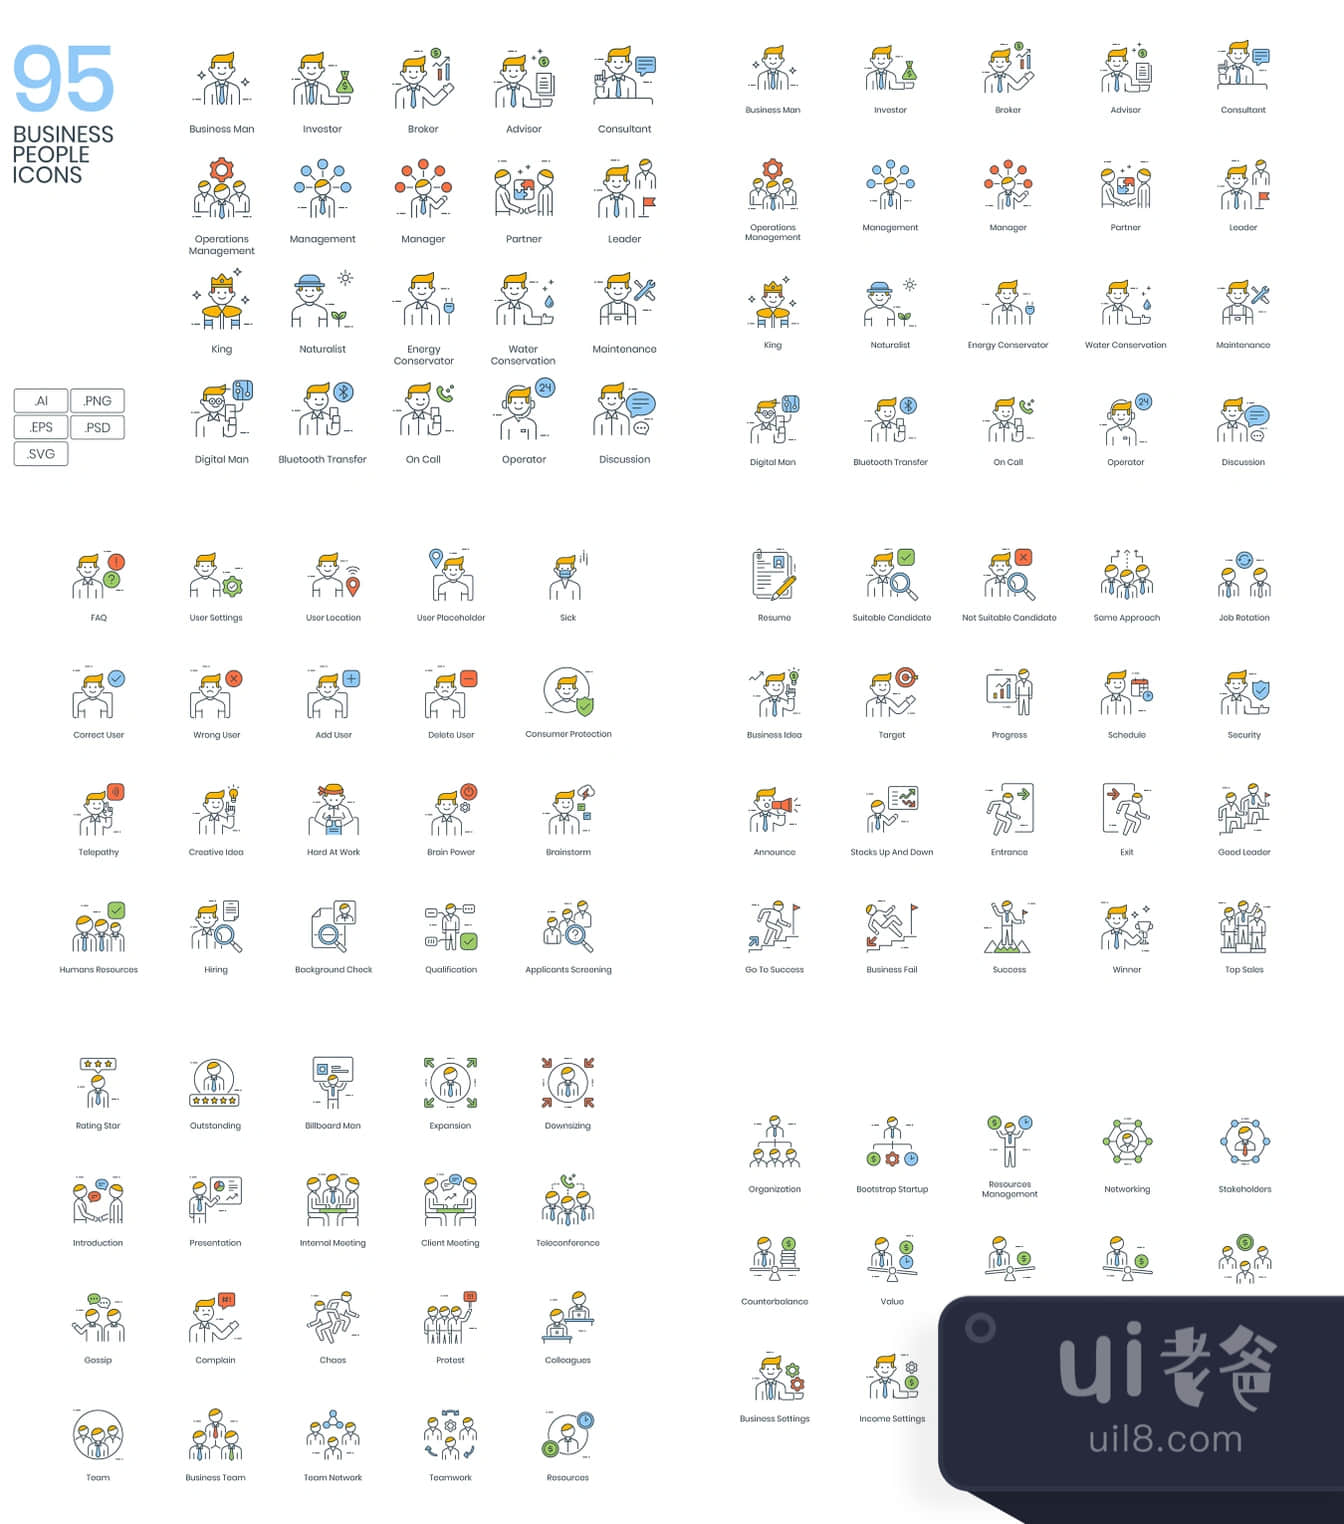 95个商业人物图标 (95 Business People Icons)插图